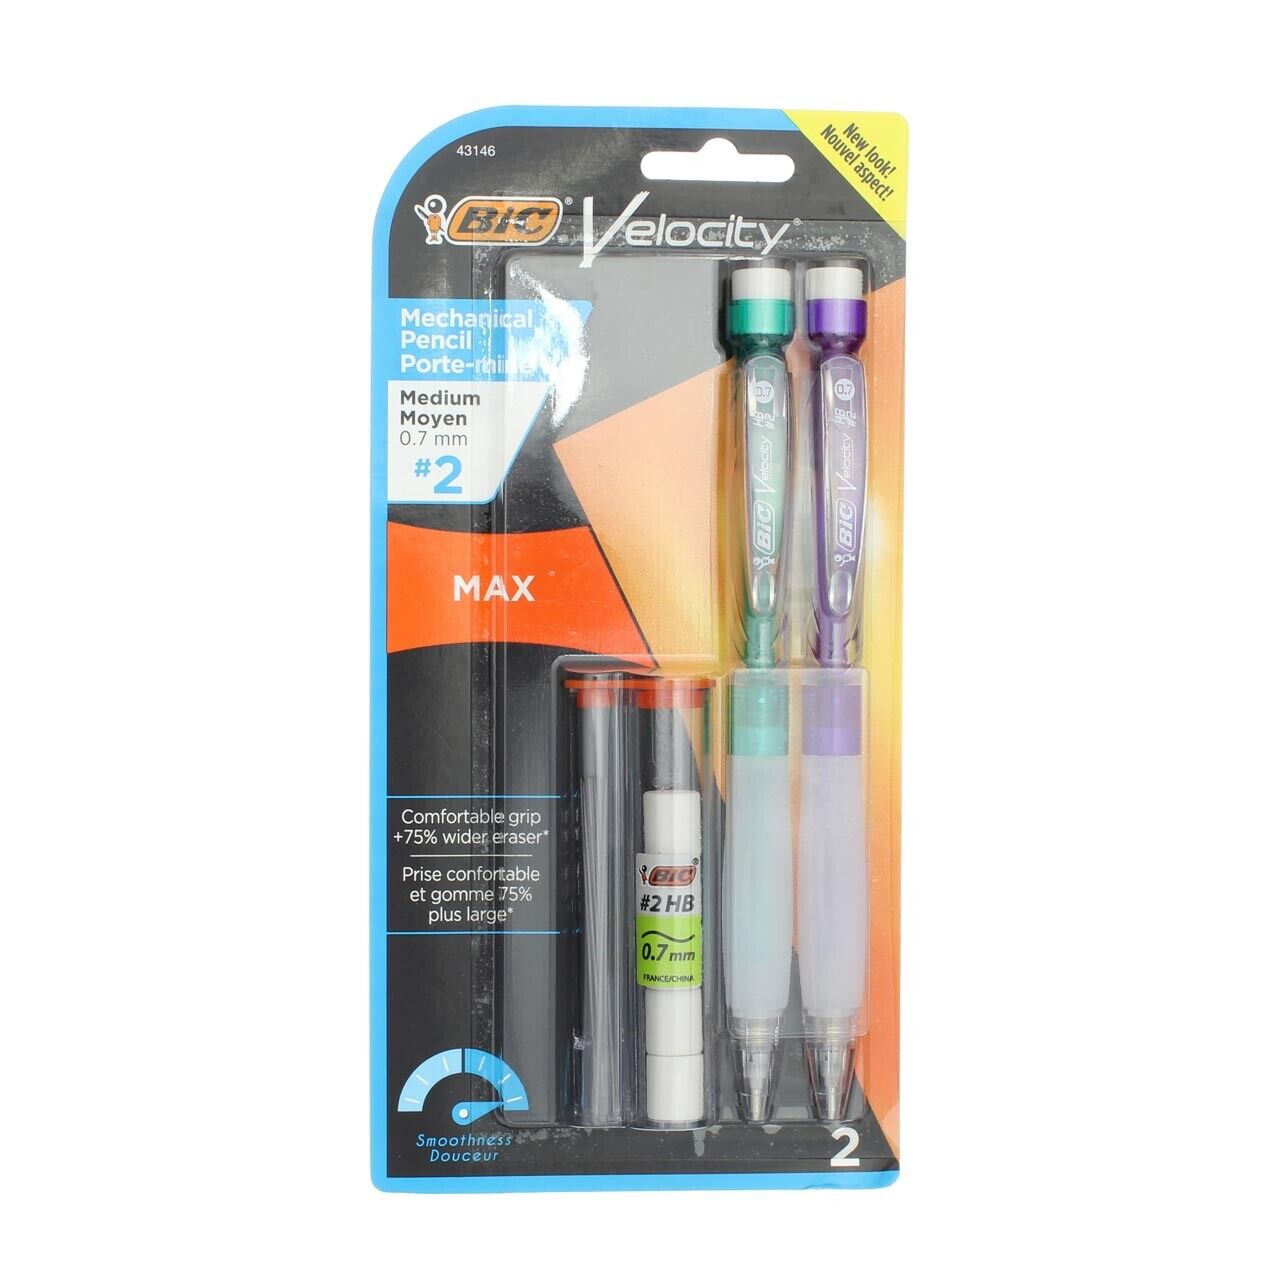 BiC Velocity Max Mechanical Pencil & Refills, 0.7 mm, #2, 2 Ct